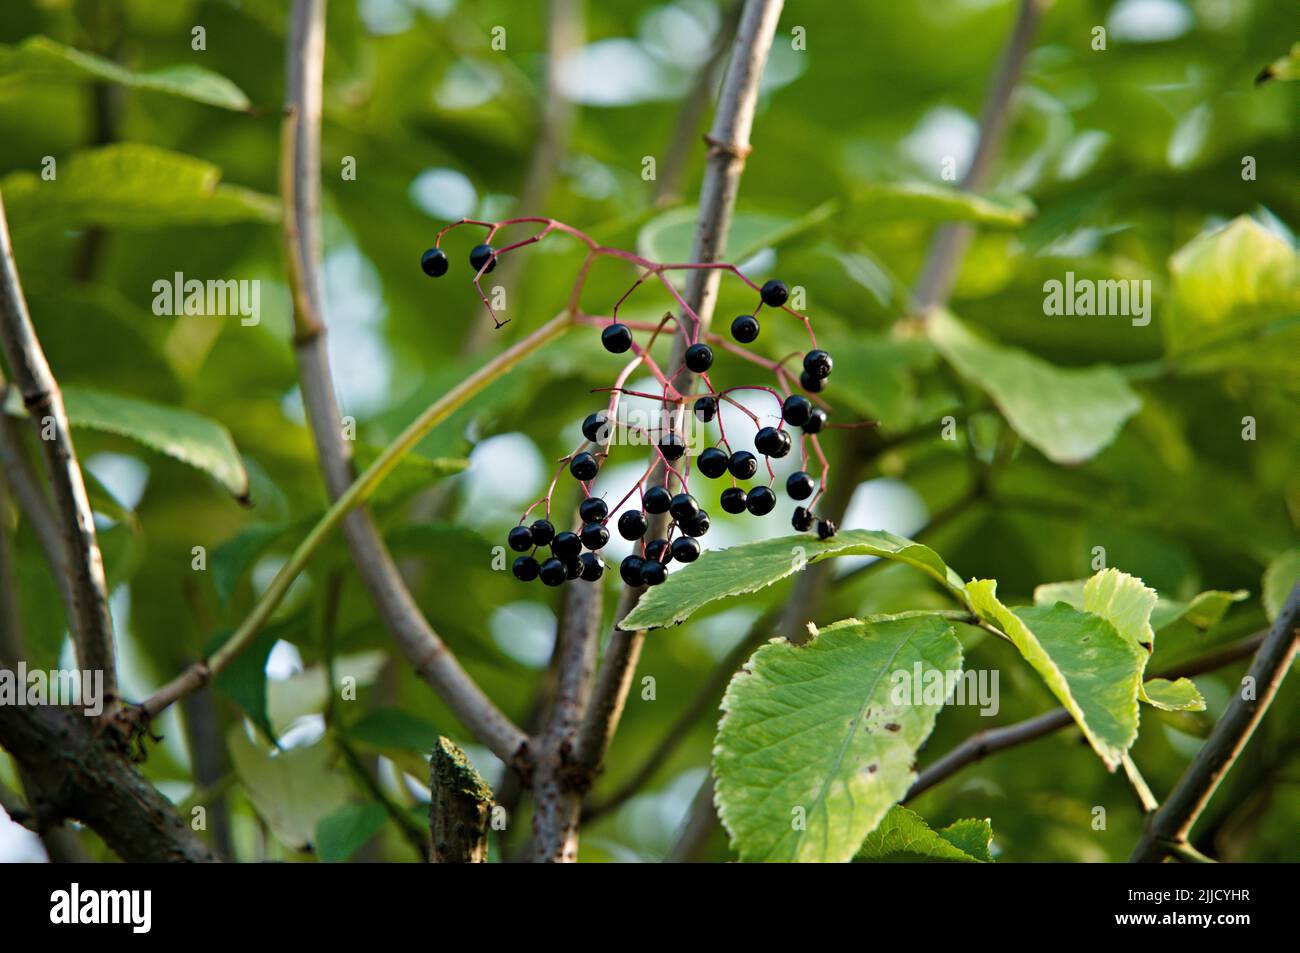 Elderberries hanging on the tree Stock Photo